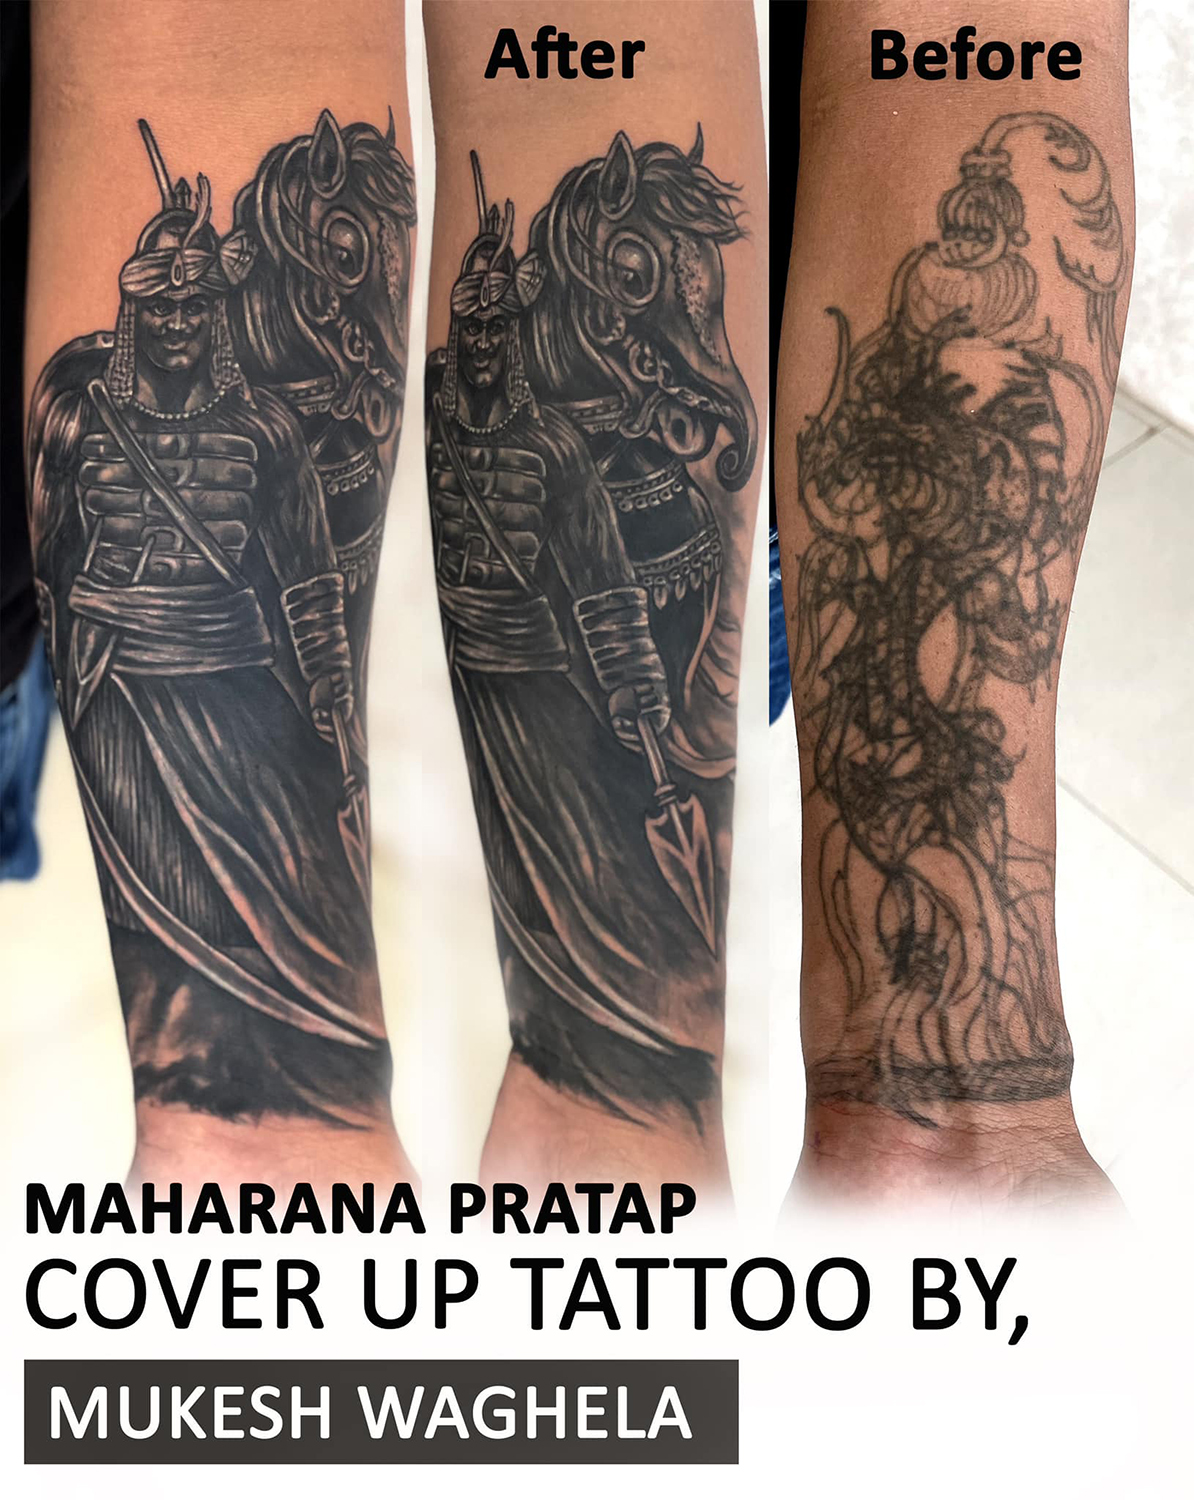 Maharana Pratap coverup Tattoo